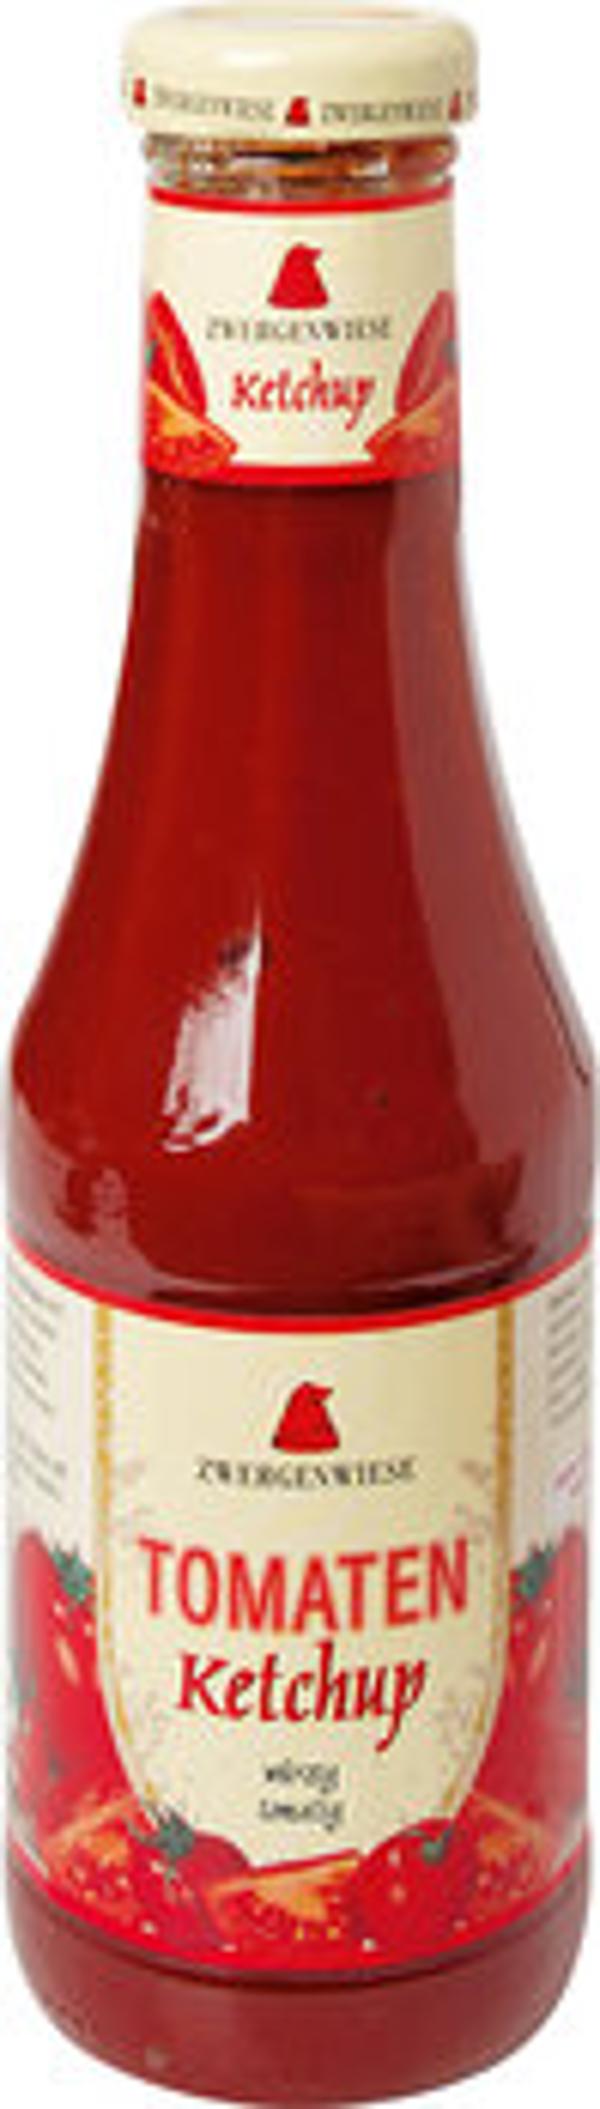 Produktfoto zu Tomaten Ketchup, 500ml